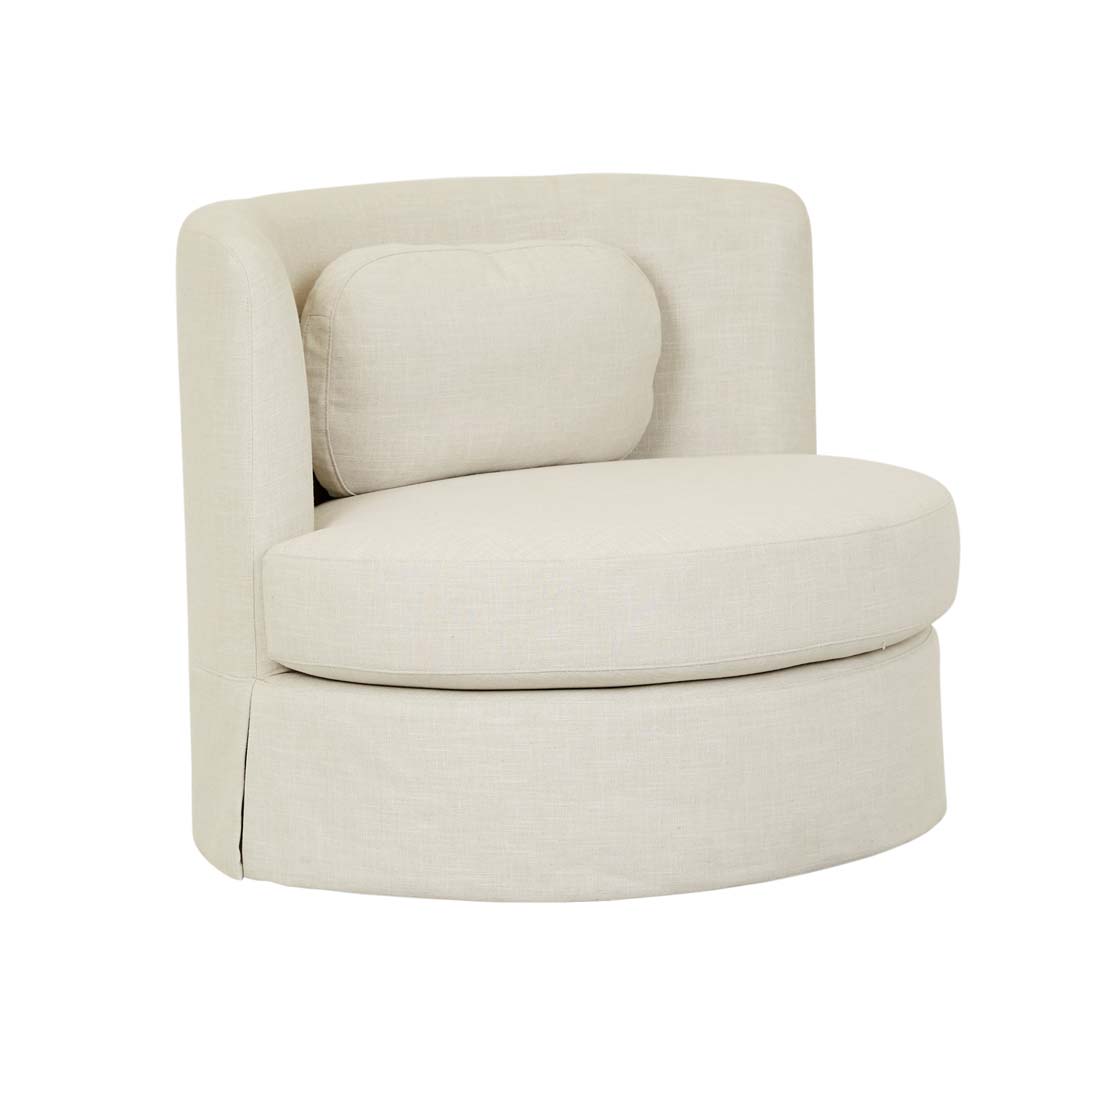 Sidney Bay Sofa Chair image 1